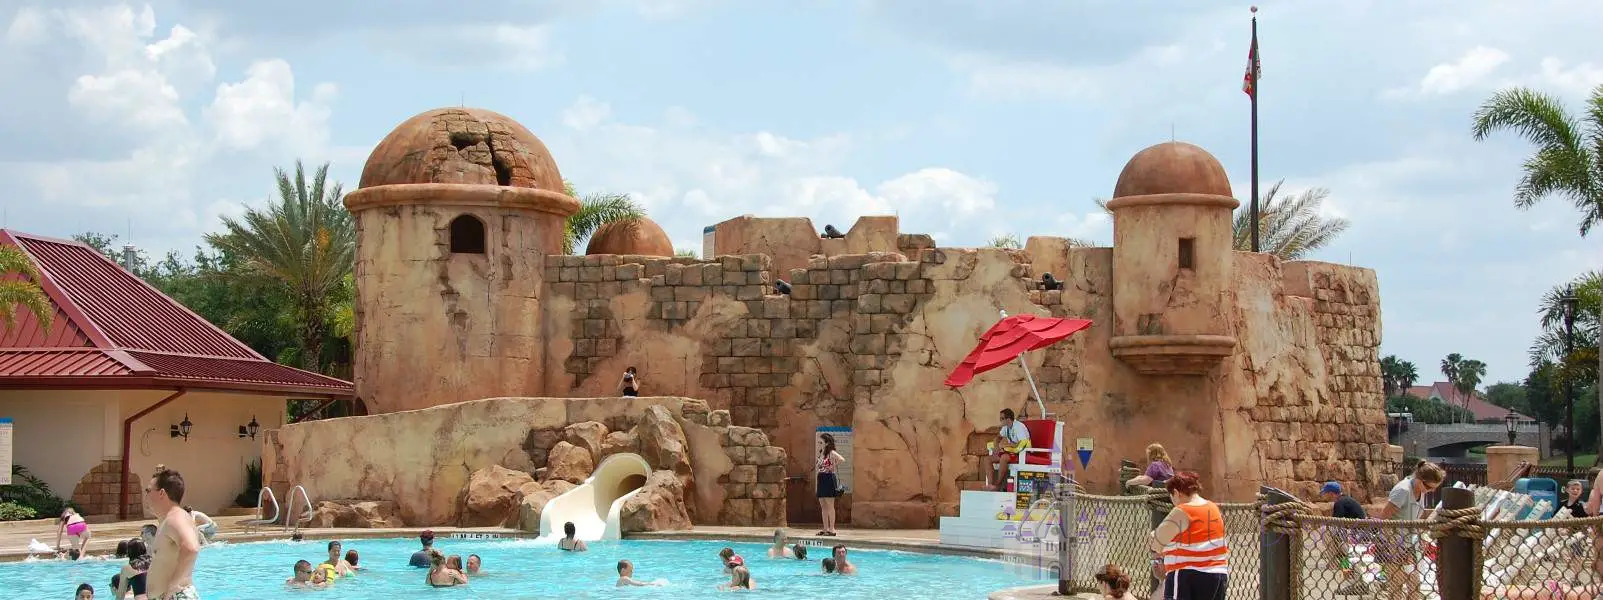 Caribbean Beach Resort bringt die Karibik nach Disney!